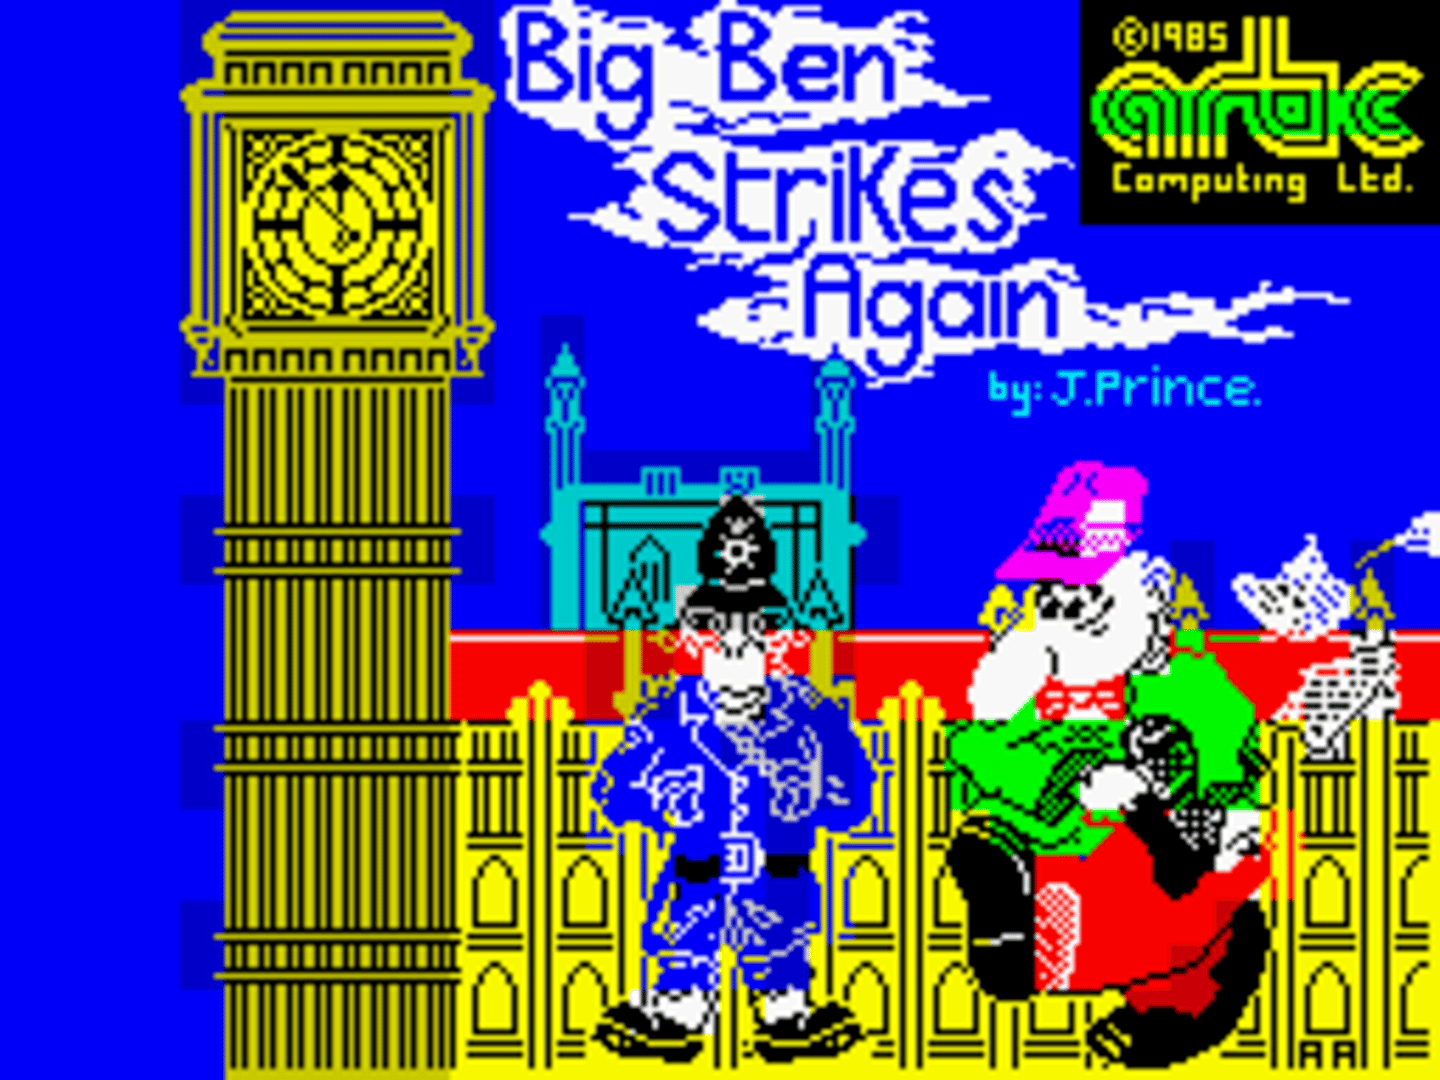 Big Ben Strikes Again screenshot